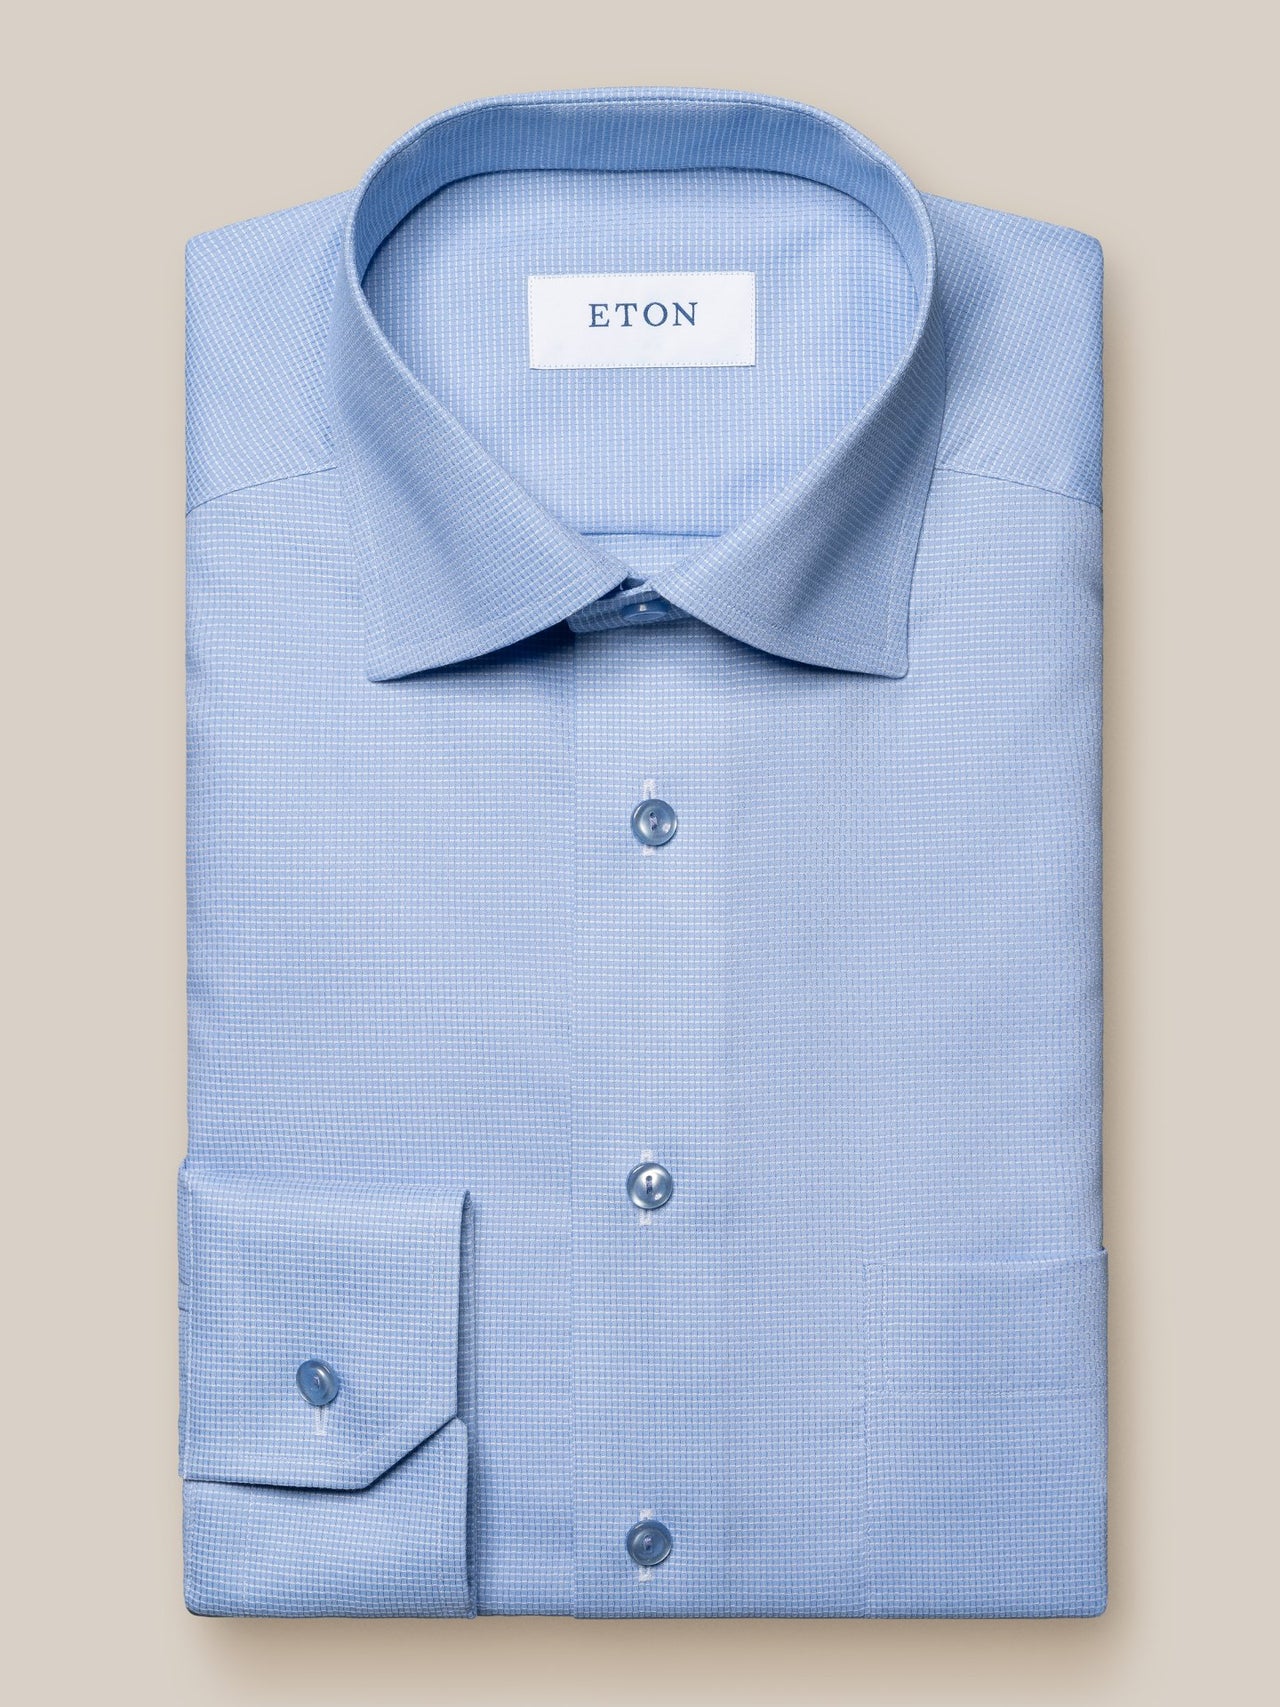 ETON Cutaway Long Sleeve Shirt Single Cuff Classic Fit LIGHT BLUE